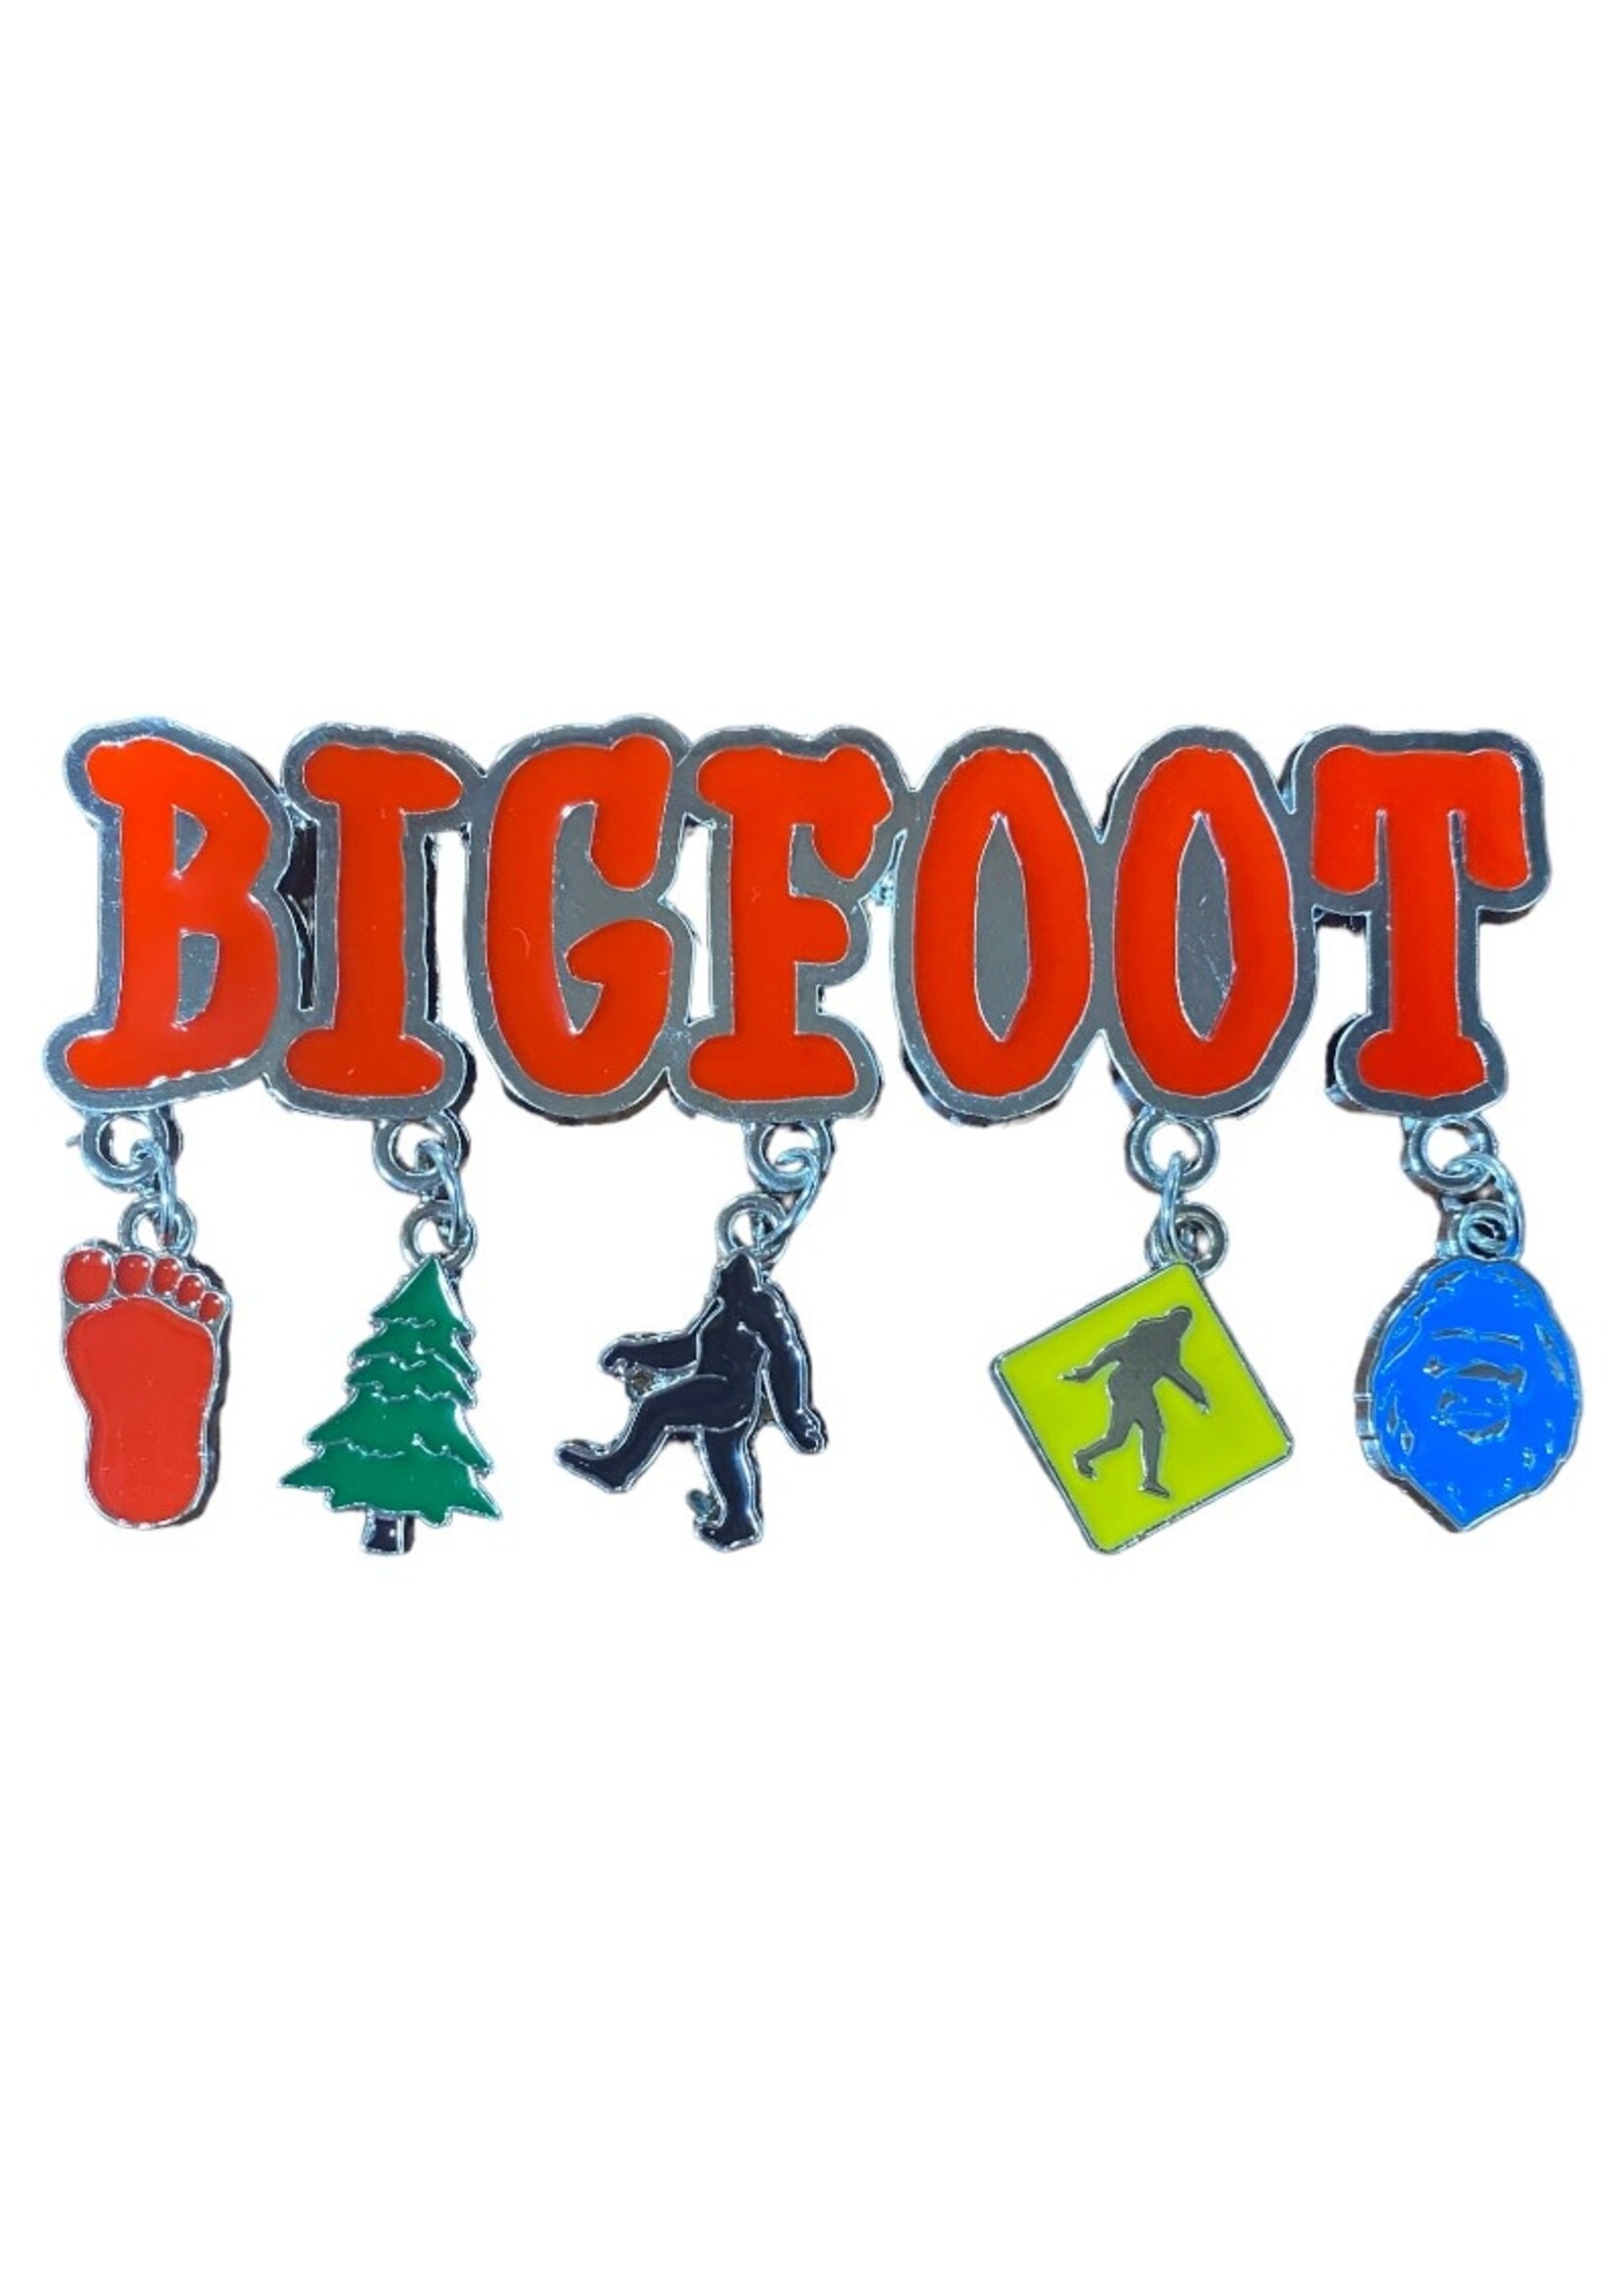 Magnet (Bigfoot Charms)